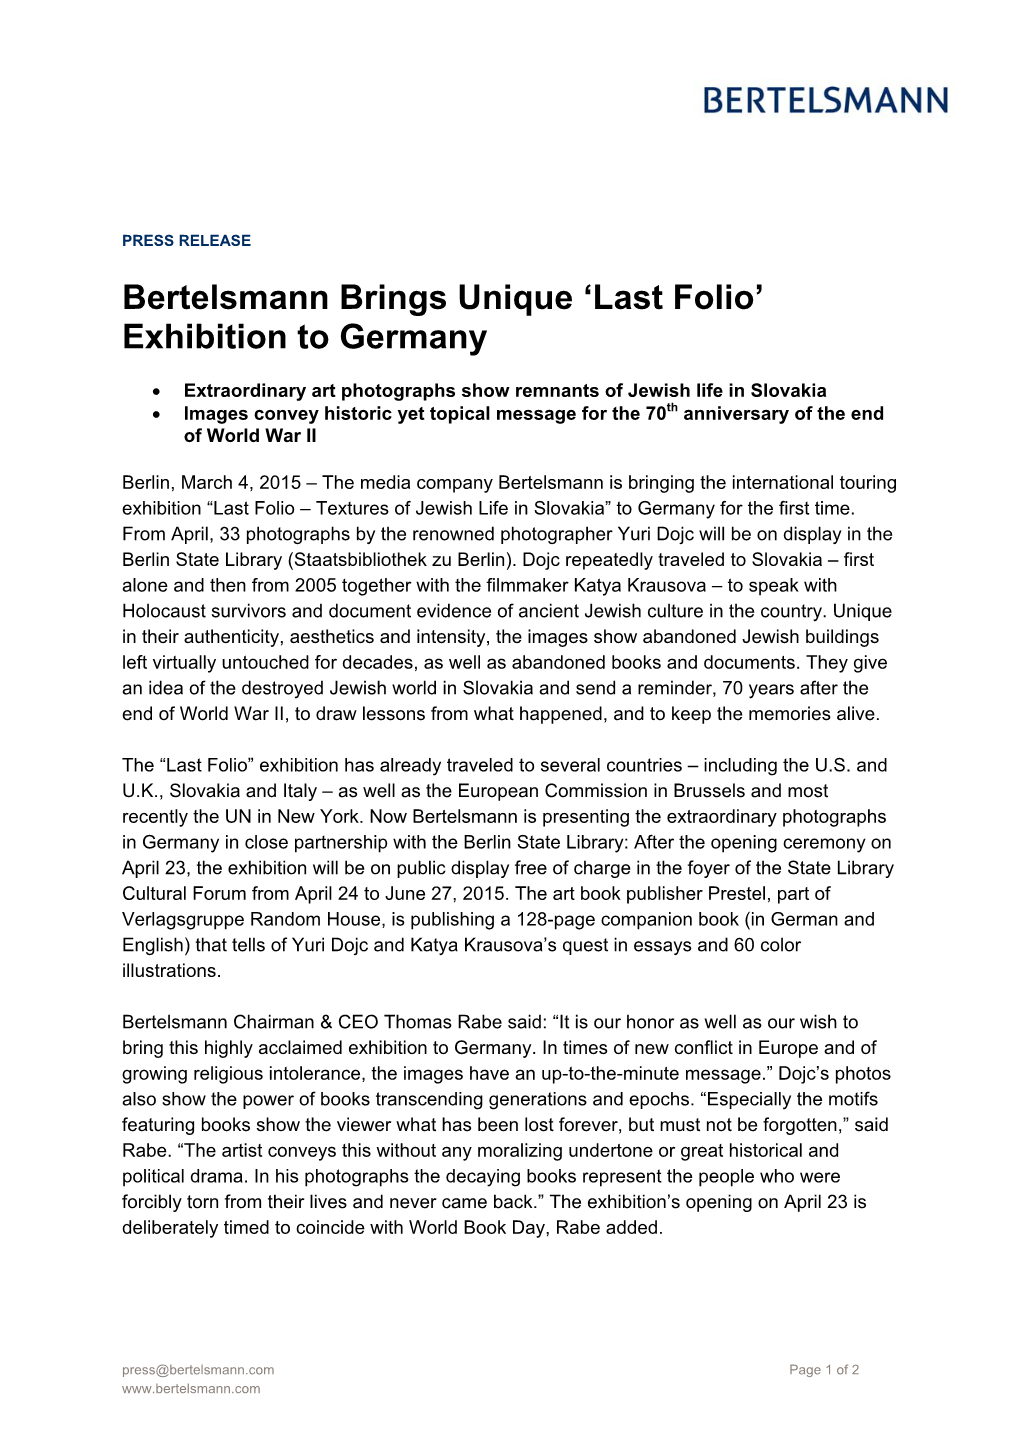 Bertelsmann Brings Unique 'Last Folio' Exhibition to Germany